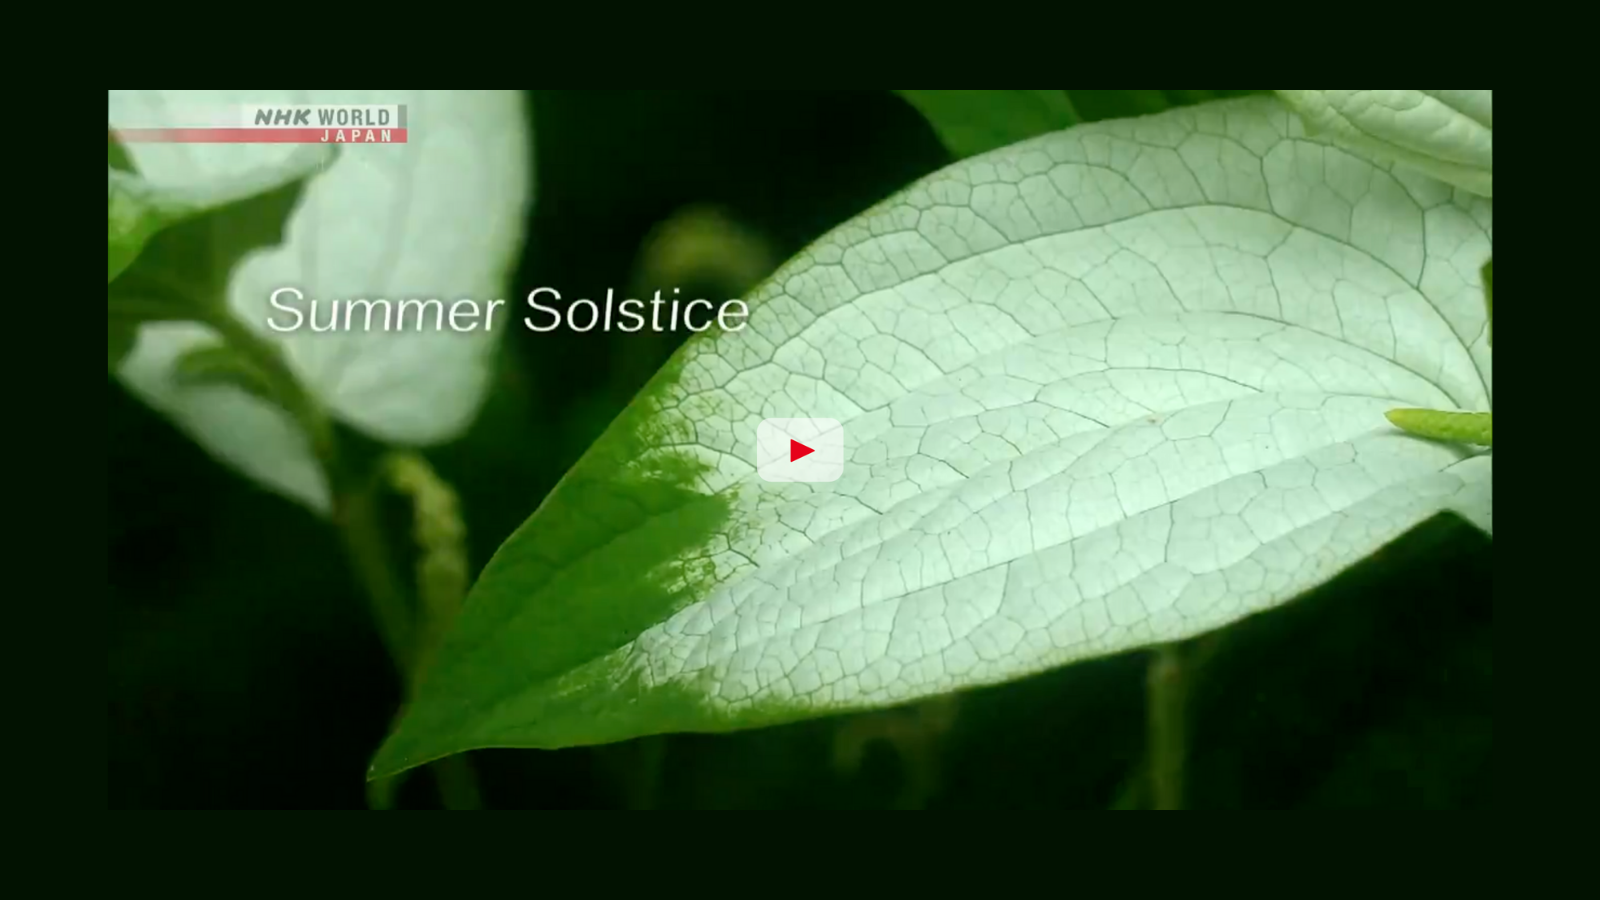 NHK World Summer Solstice Video